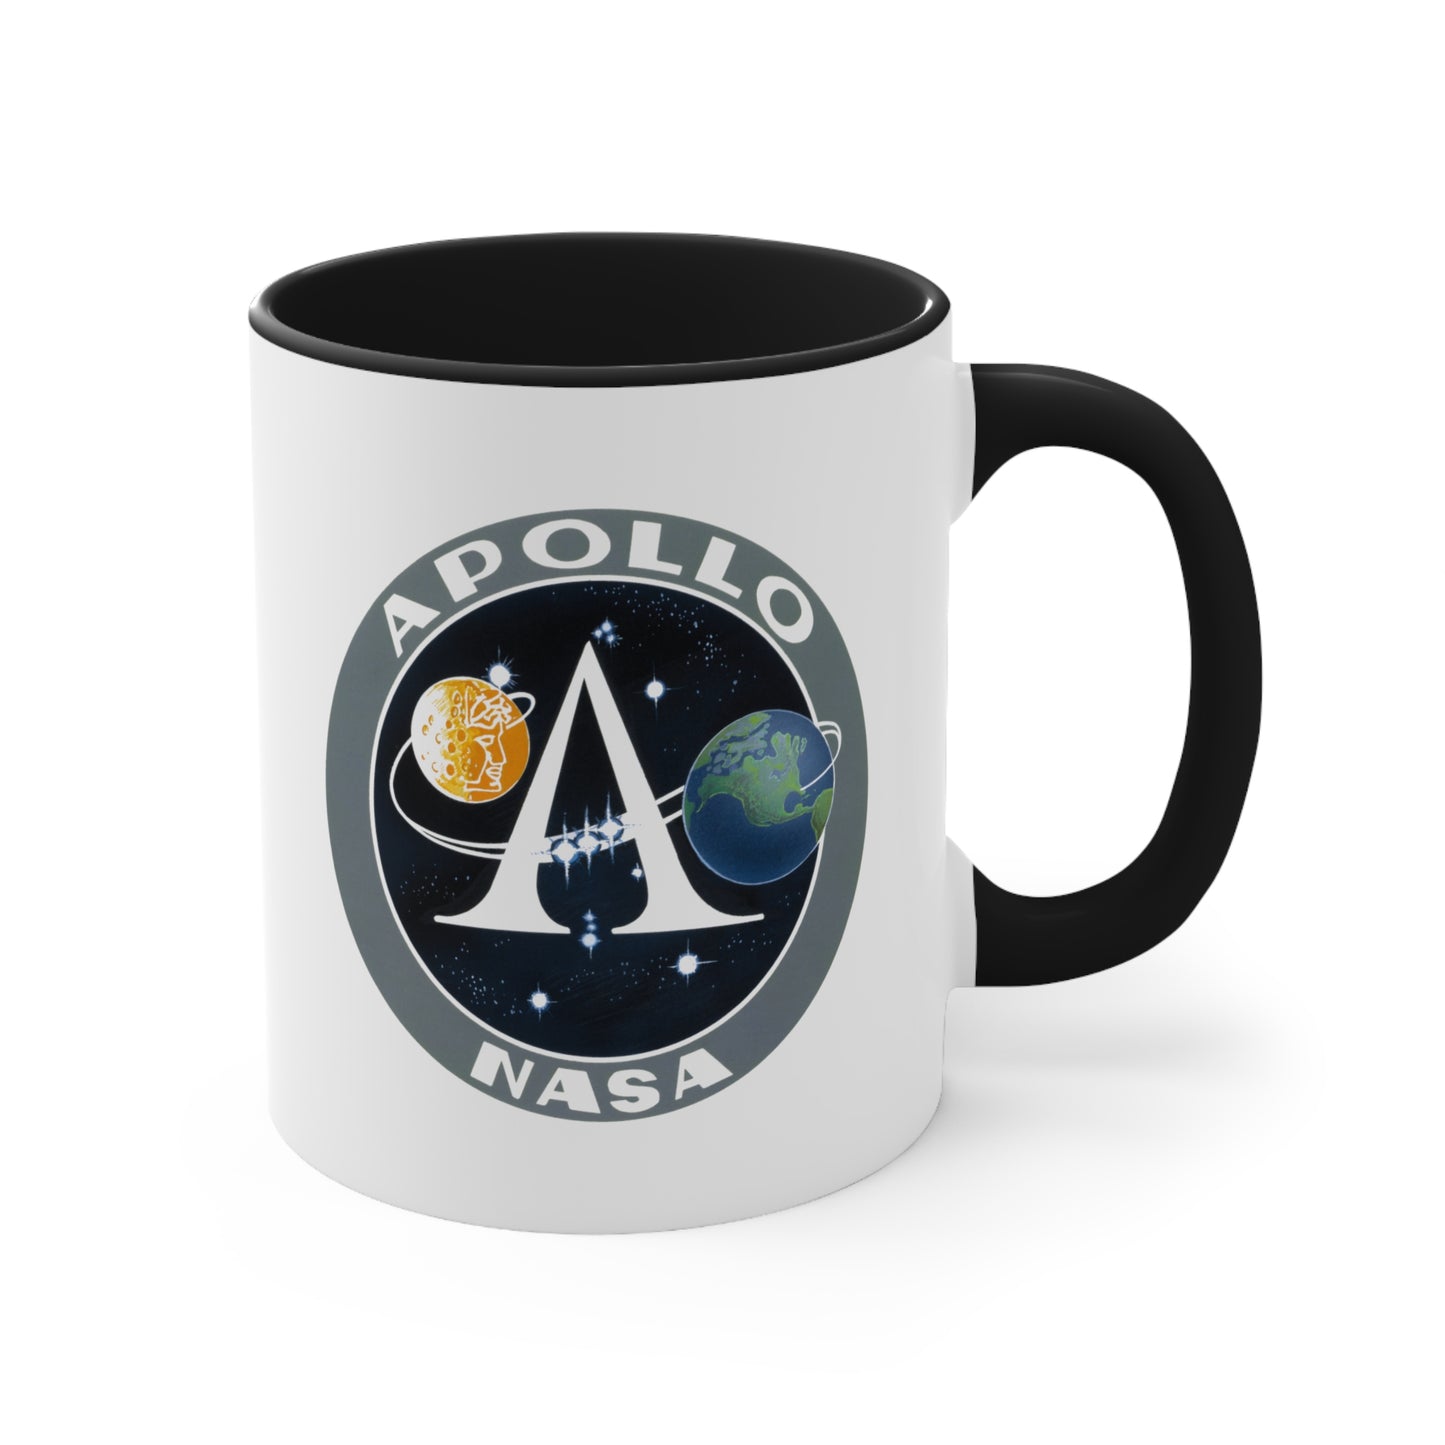 NASA Apollo Program Coffee Mug - Double Sided Black Accent White Ceramic 11oz by TheGlassyLass